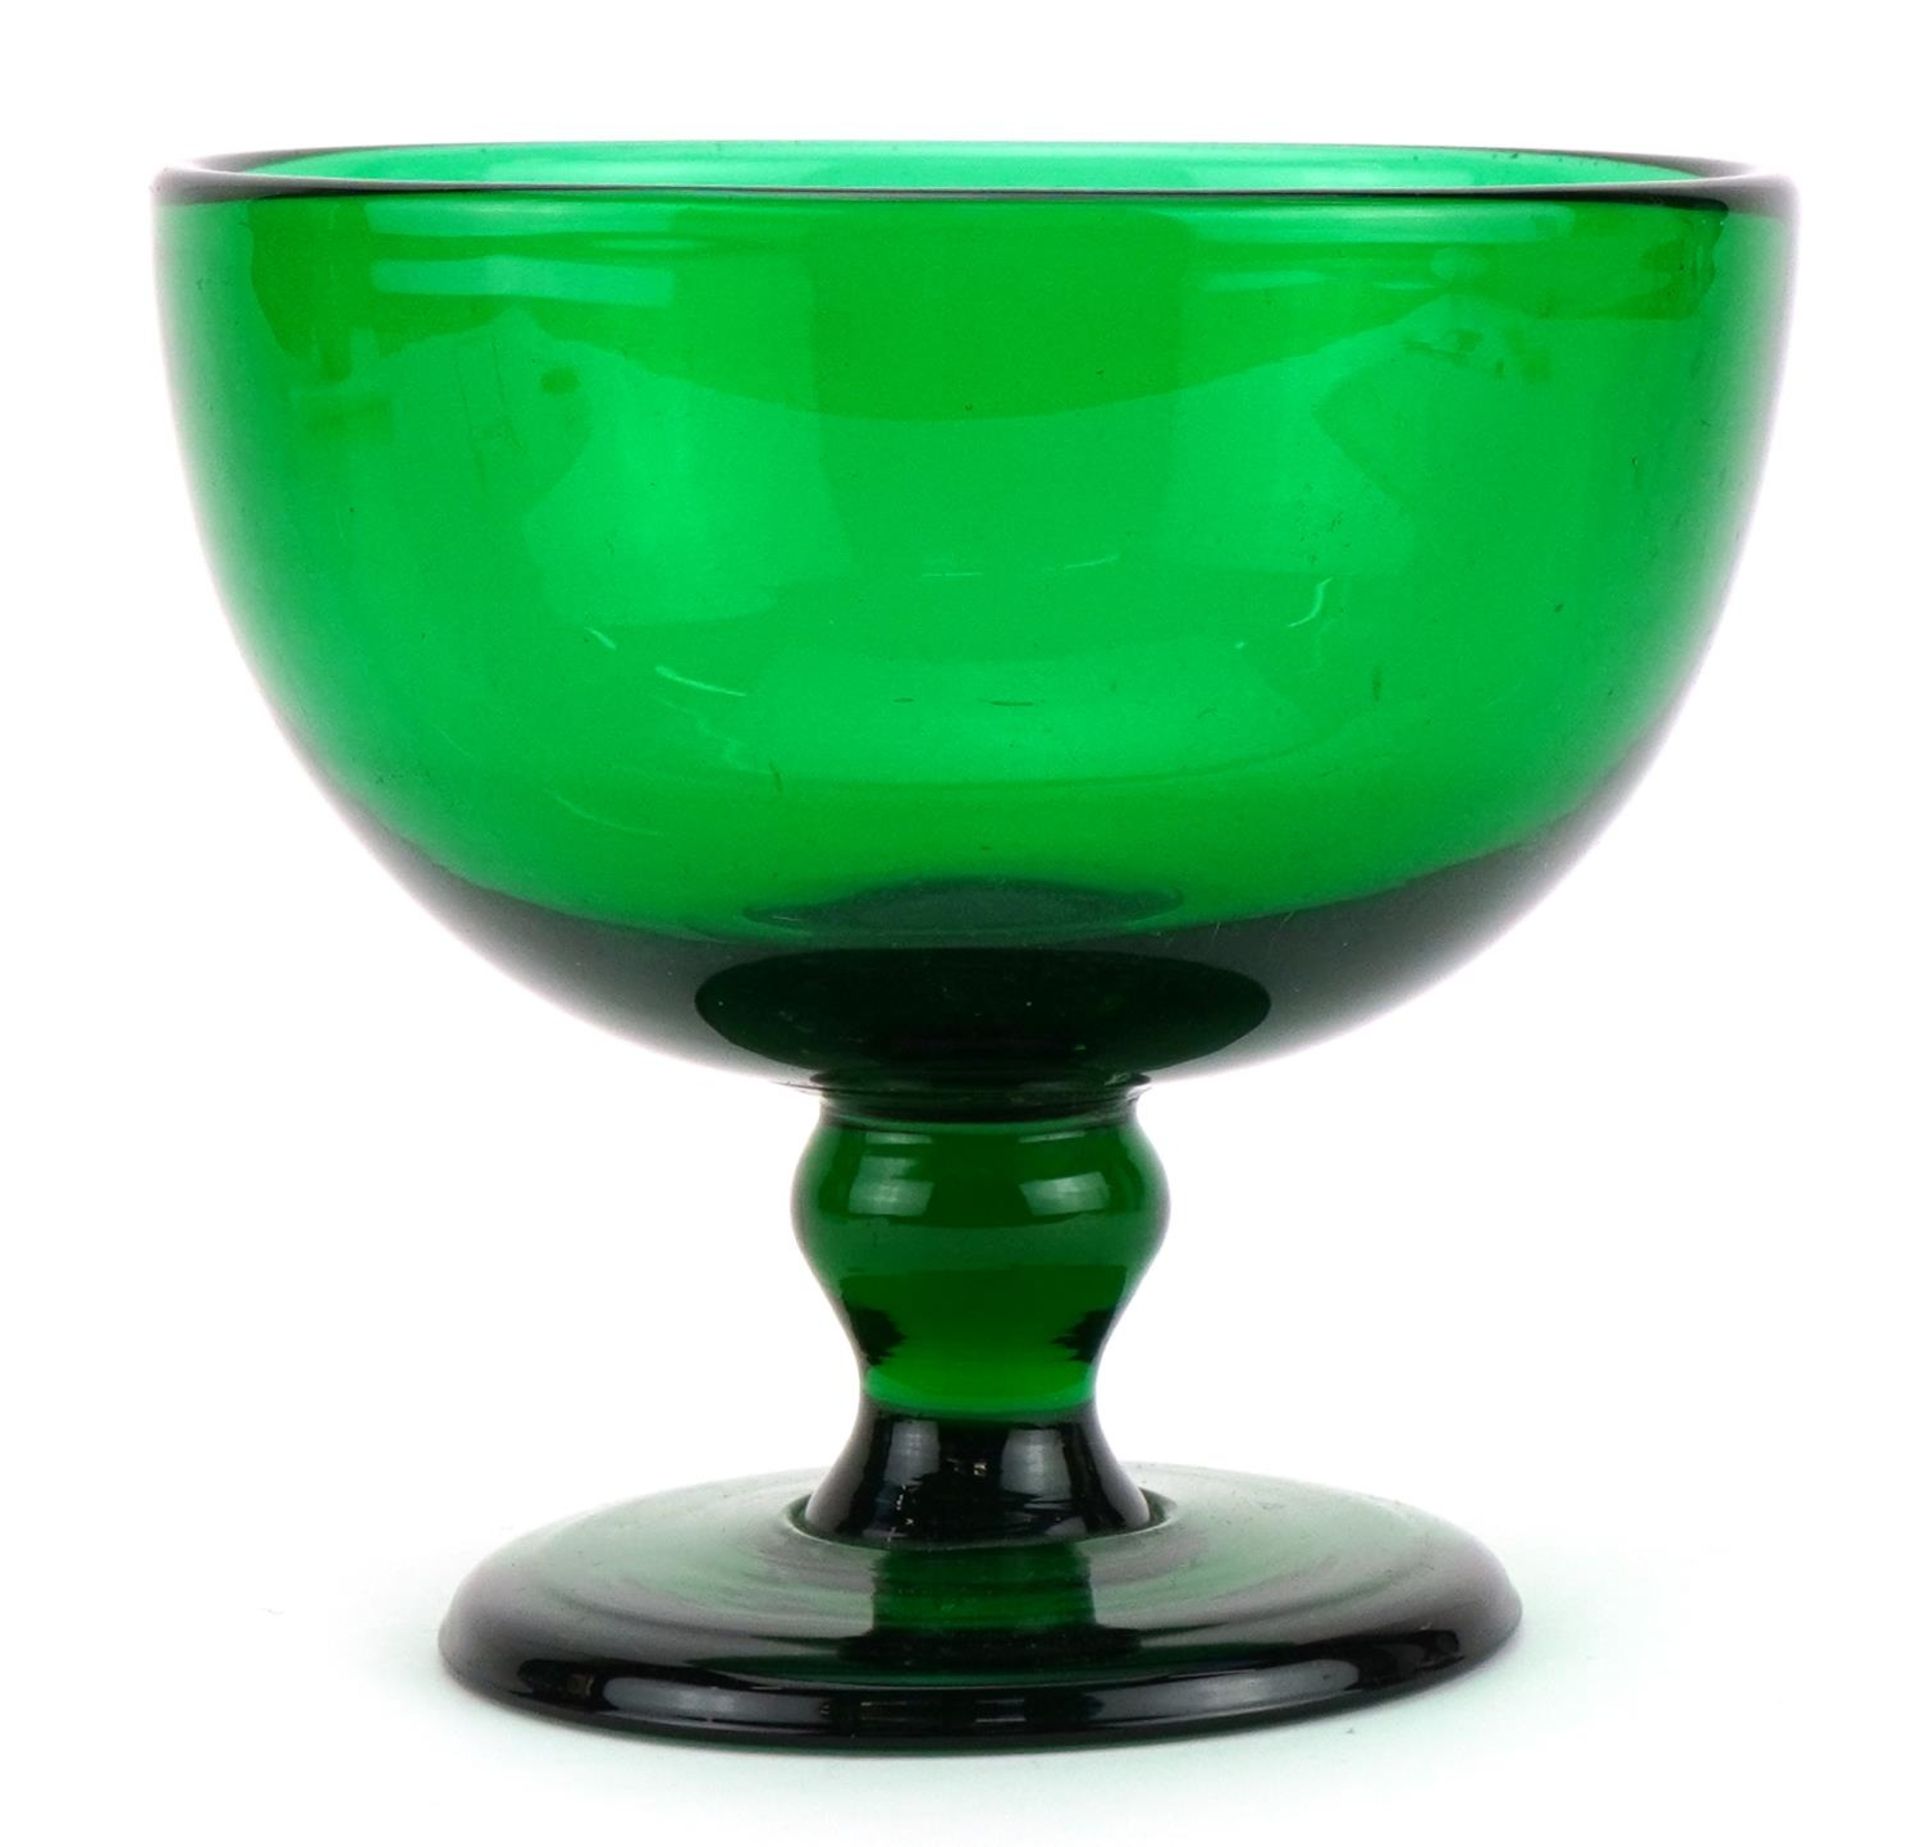 Antique pedestal green glass finger bowl, 4cm in diameter - Image 2 of 3